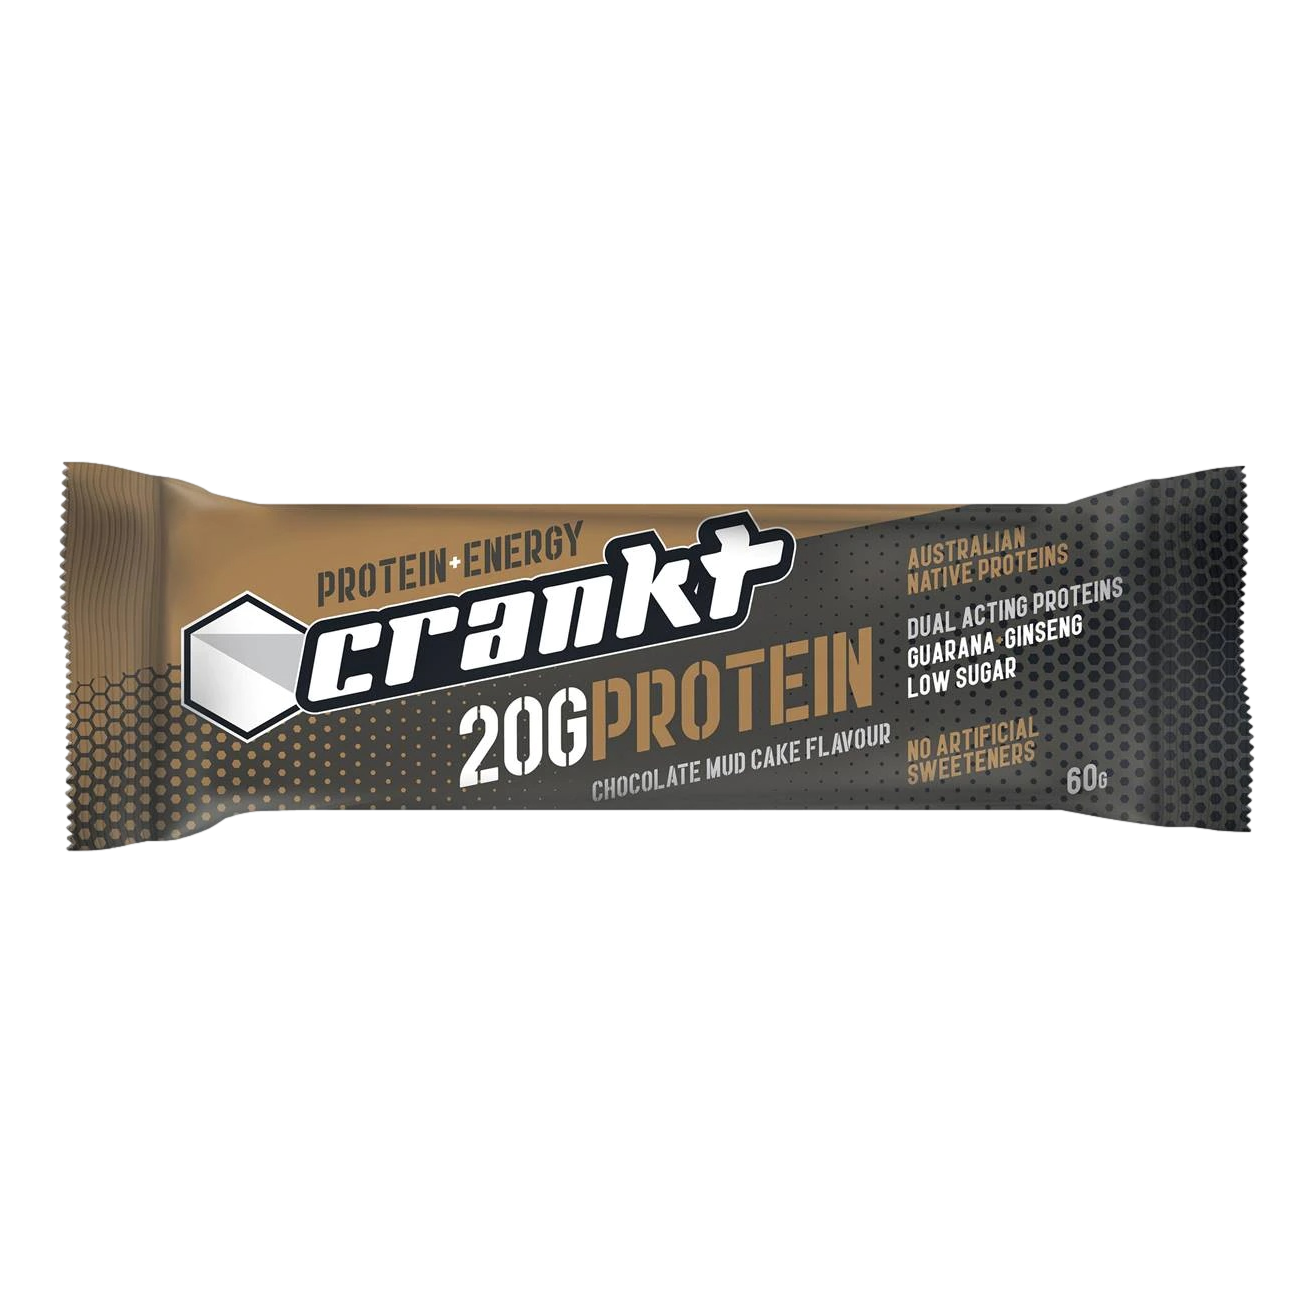 Crankt Chocolate Mud Cake 20g Protein + Energy Bar 60g